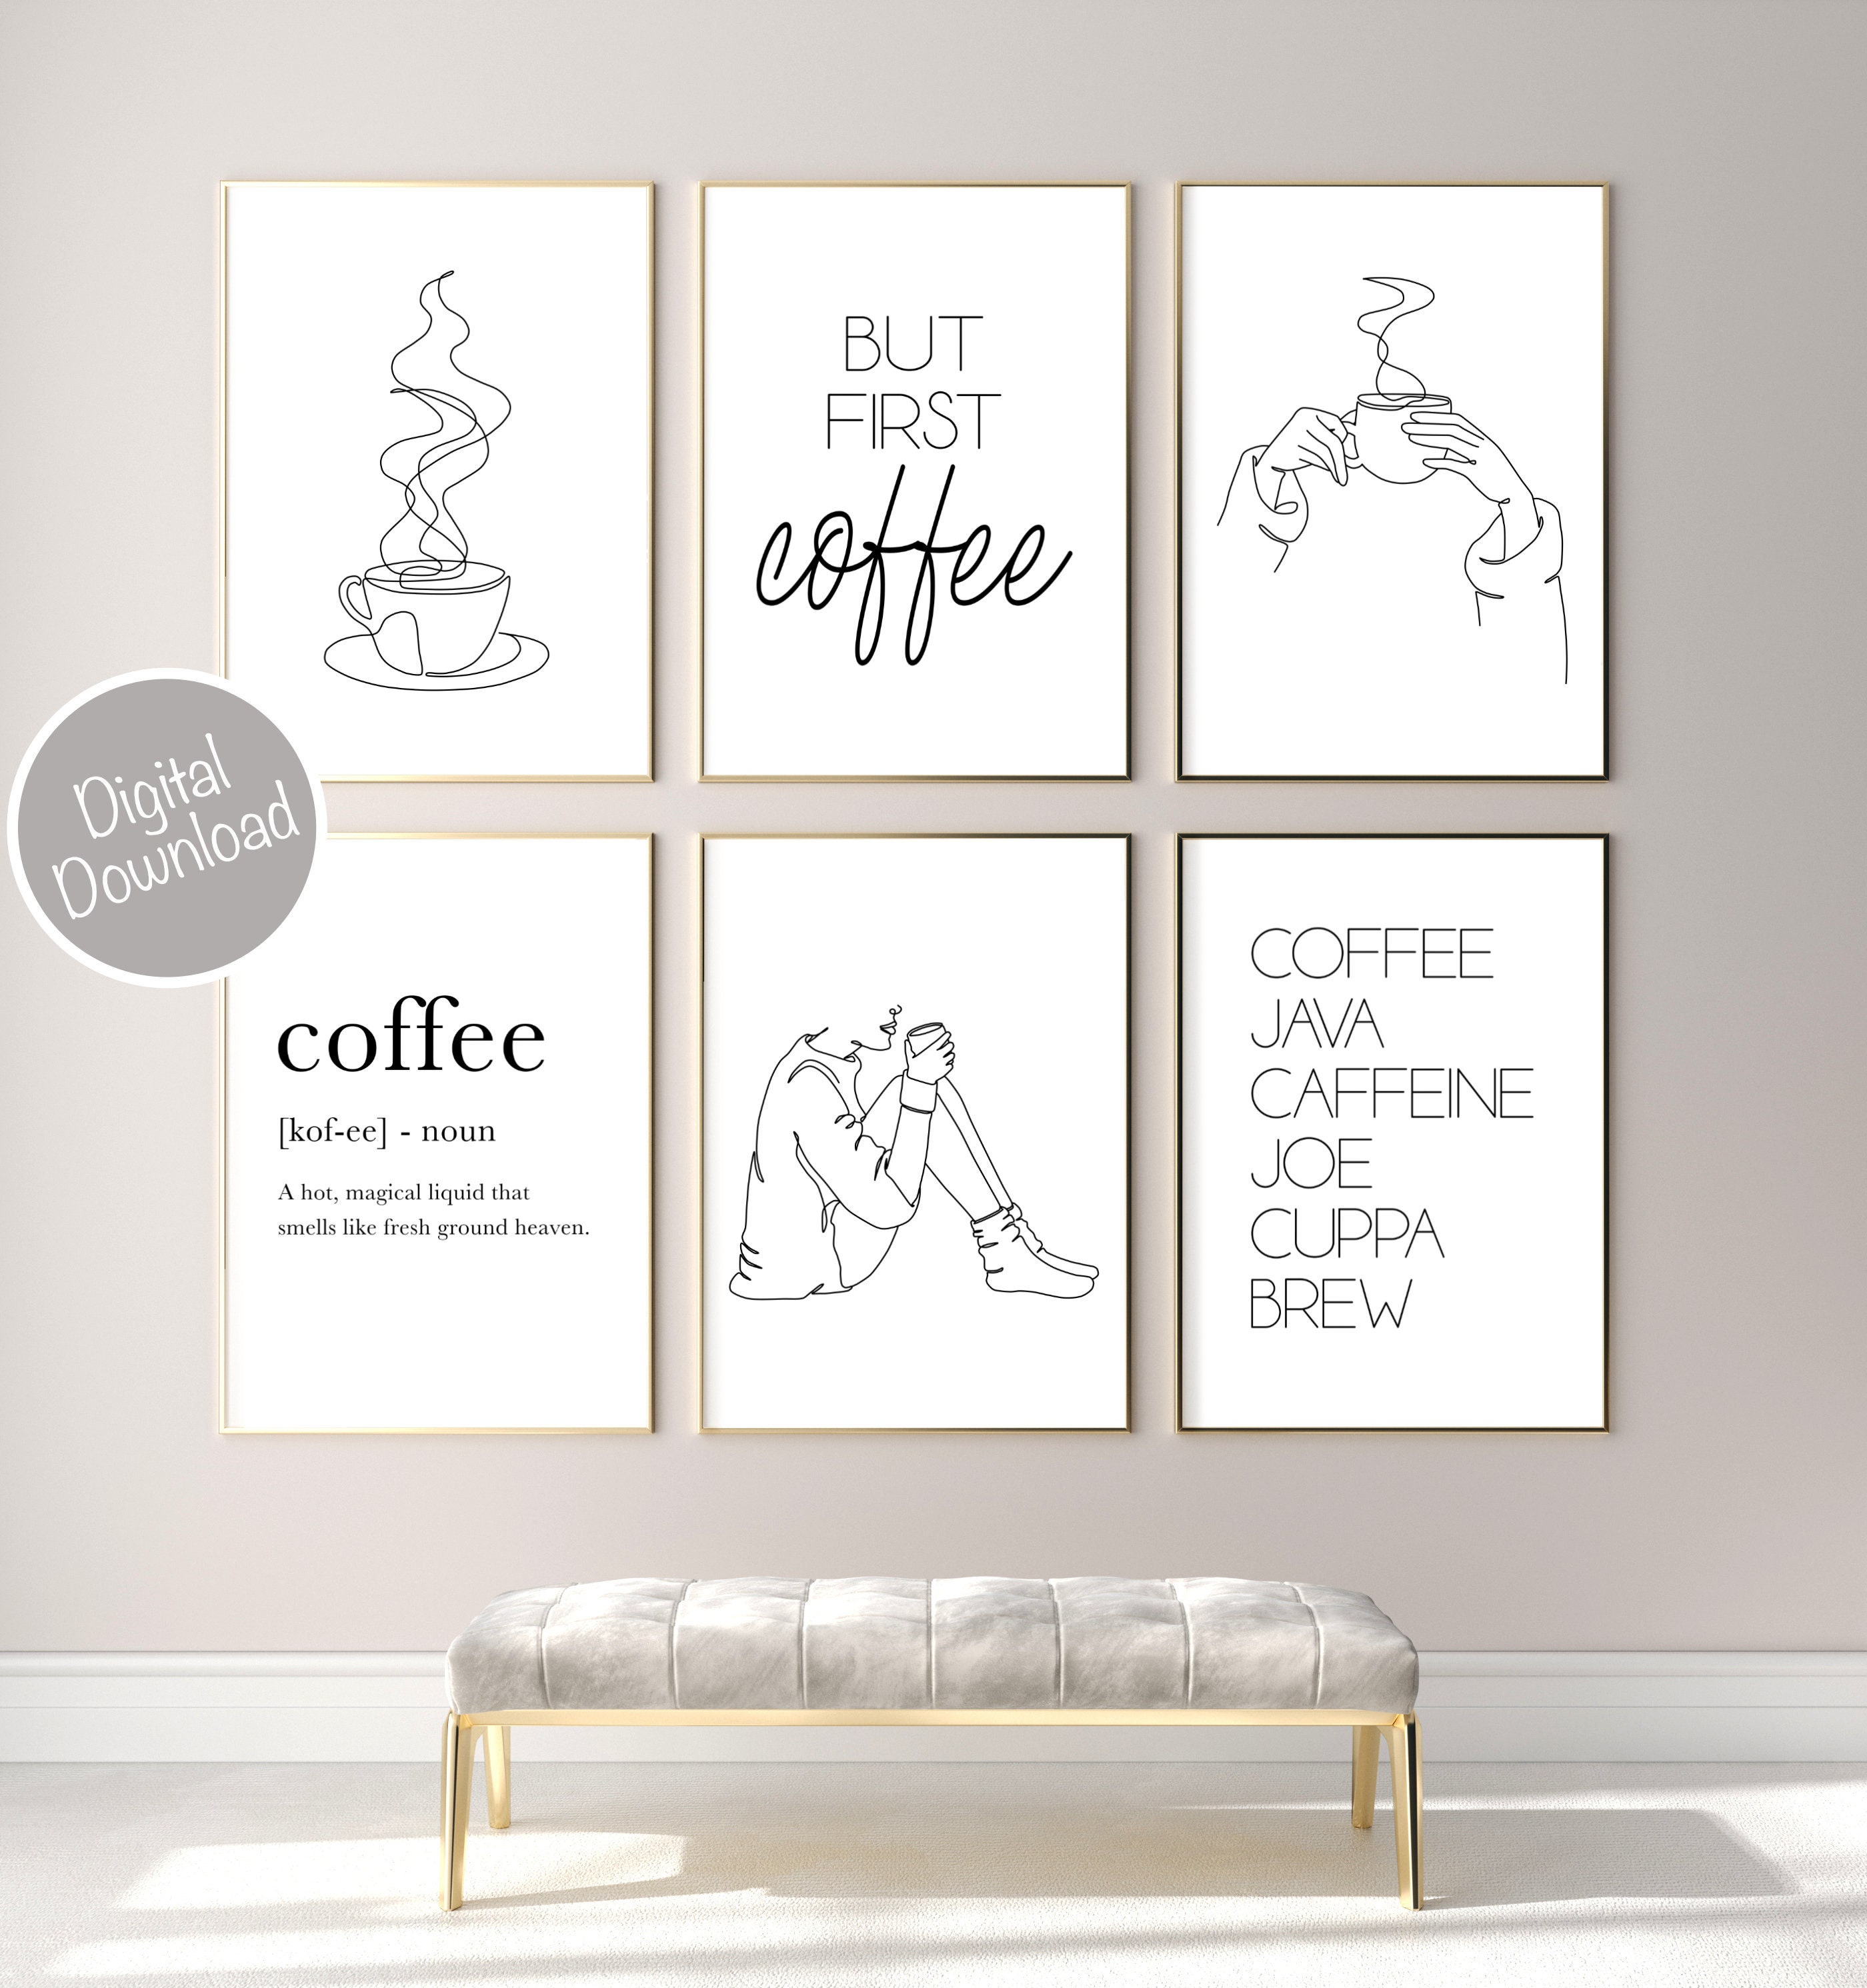 A3 Semi-Abstract Coffee Cup Watercolor Print - Café Art, Home & Office Decor